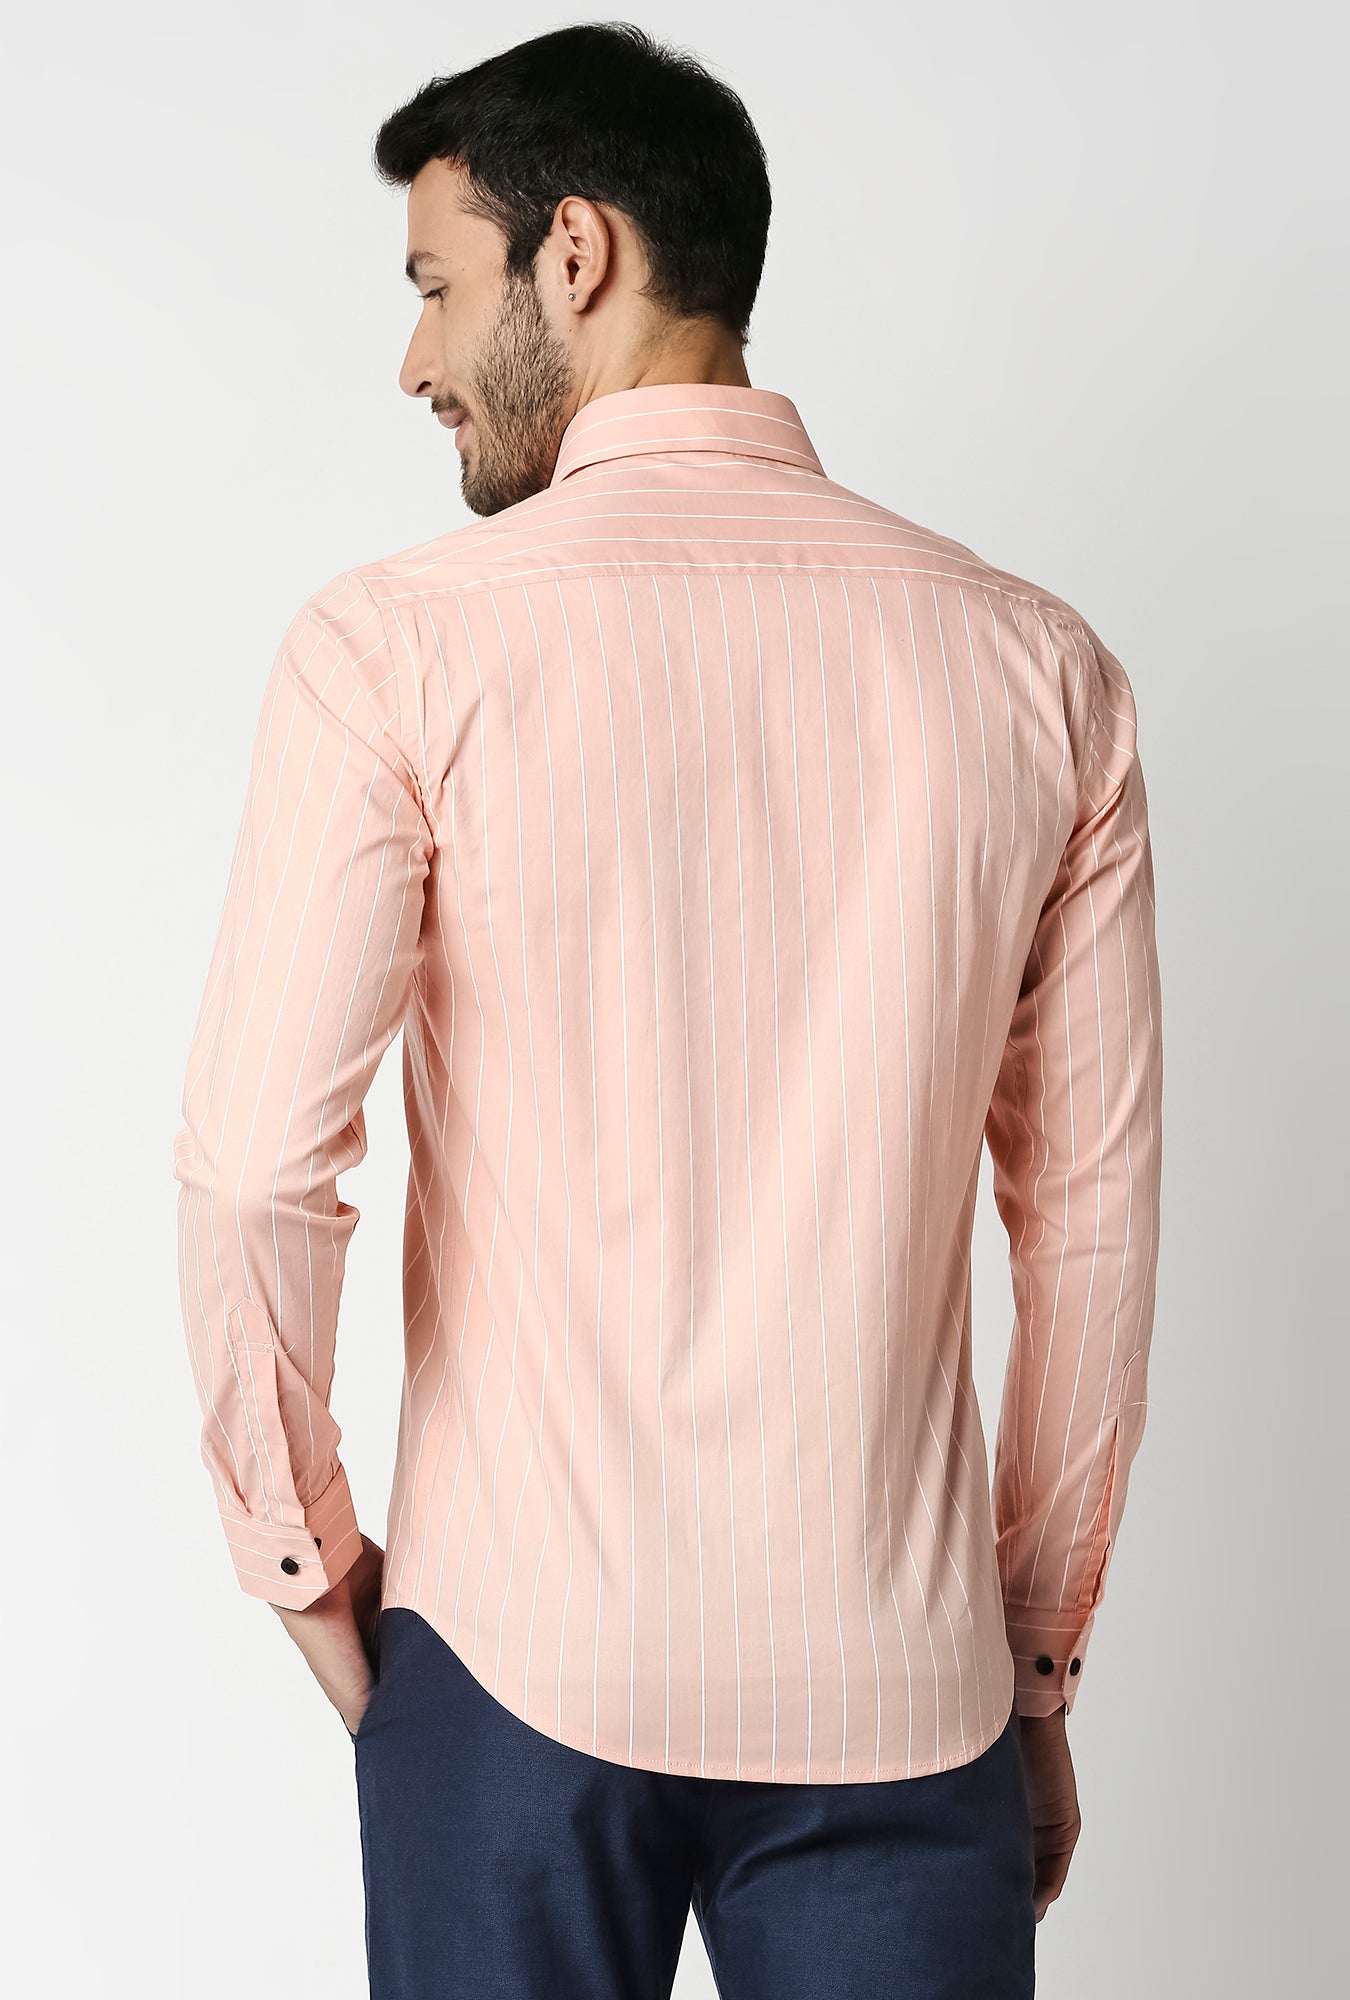 Fostino Stripes Pink Full Sleeves Shirt - Fostino - Shirts